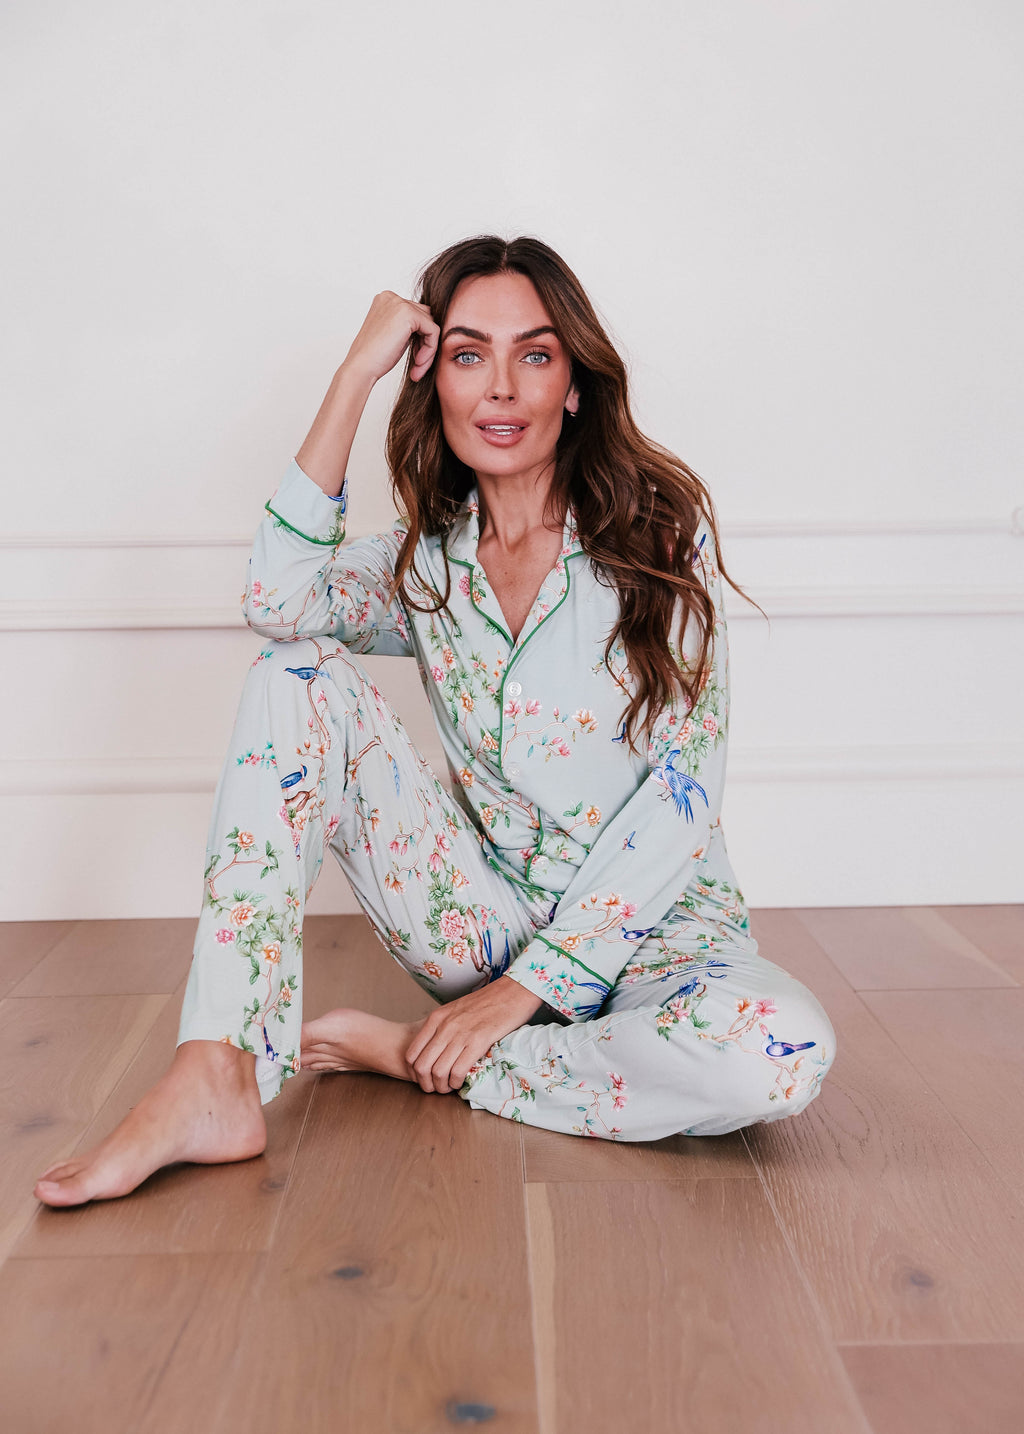 Women Pajama Set Paris Eiffel Tower Travel Luxury Nightwear Pjs Clothing  Personalized Pyjamas Women Sleepwear 